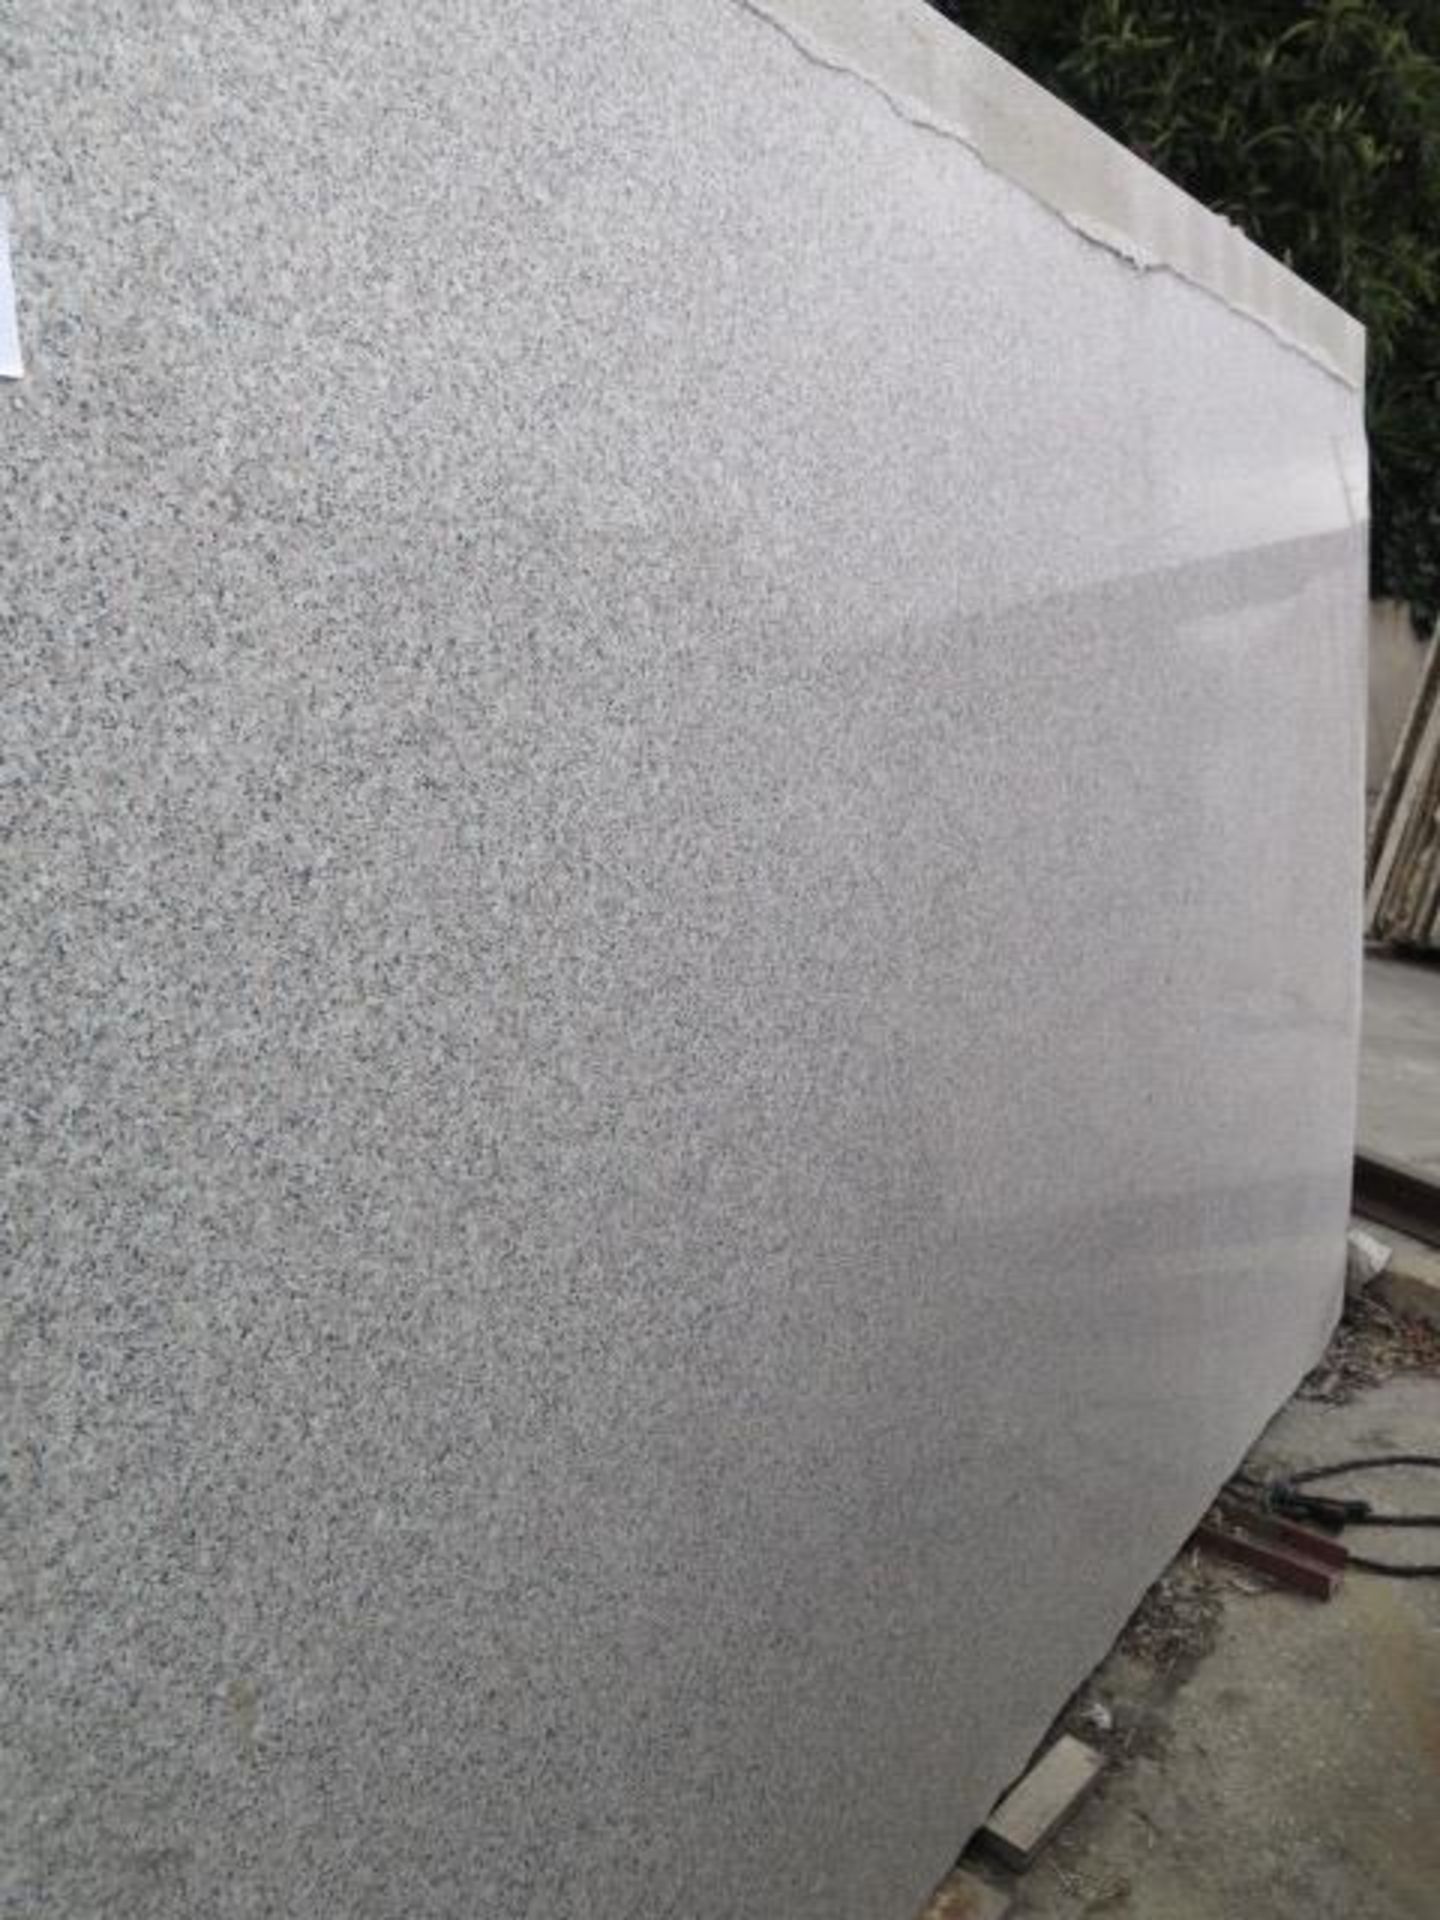 Luna Pearl Granite (6 Slabs) (SOLD AS-IS - NO WARRANTY) - Image 2 of 6